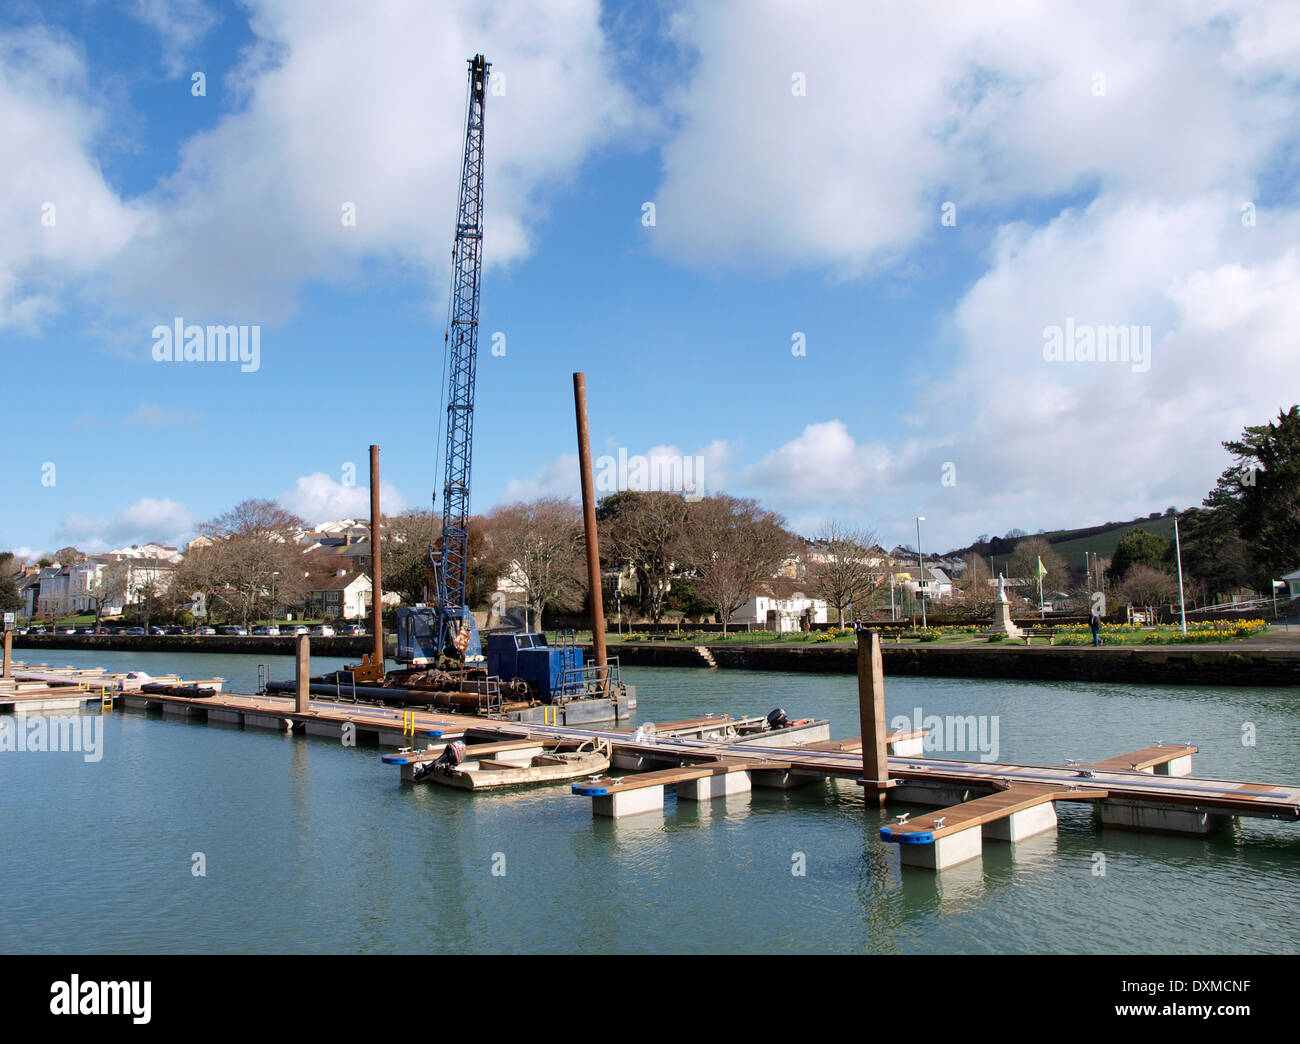 New pontoons being built, Kingsbridge, Devon, UK 2014 Stock Photo